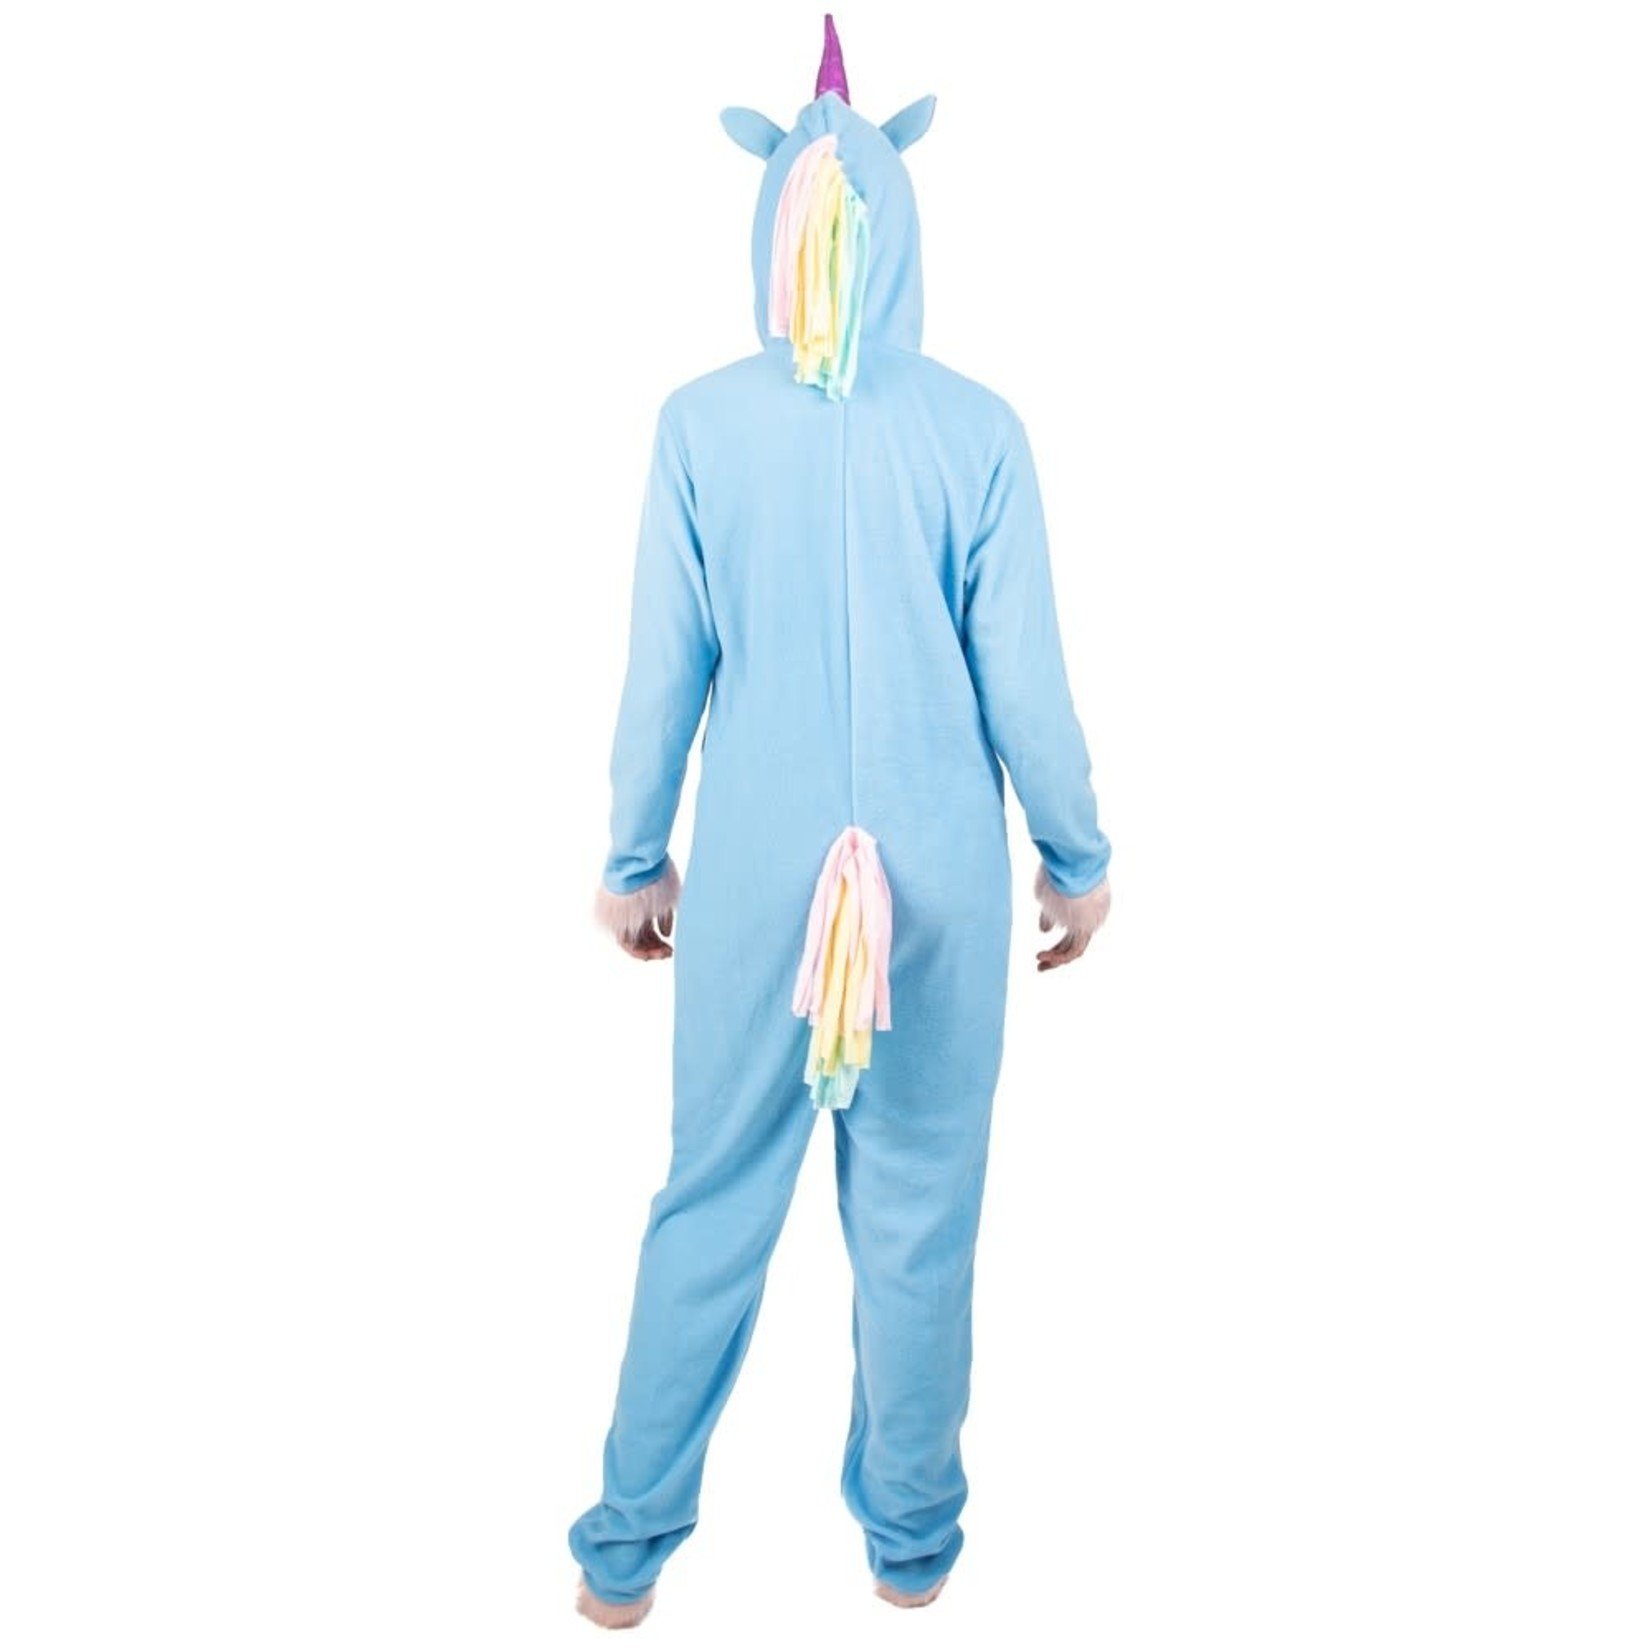 Onesie (Adult) Blue Unicorn - XL